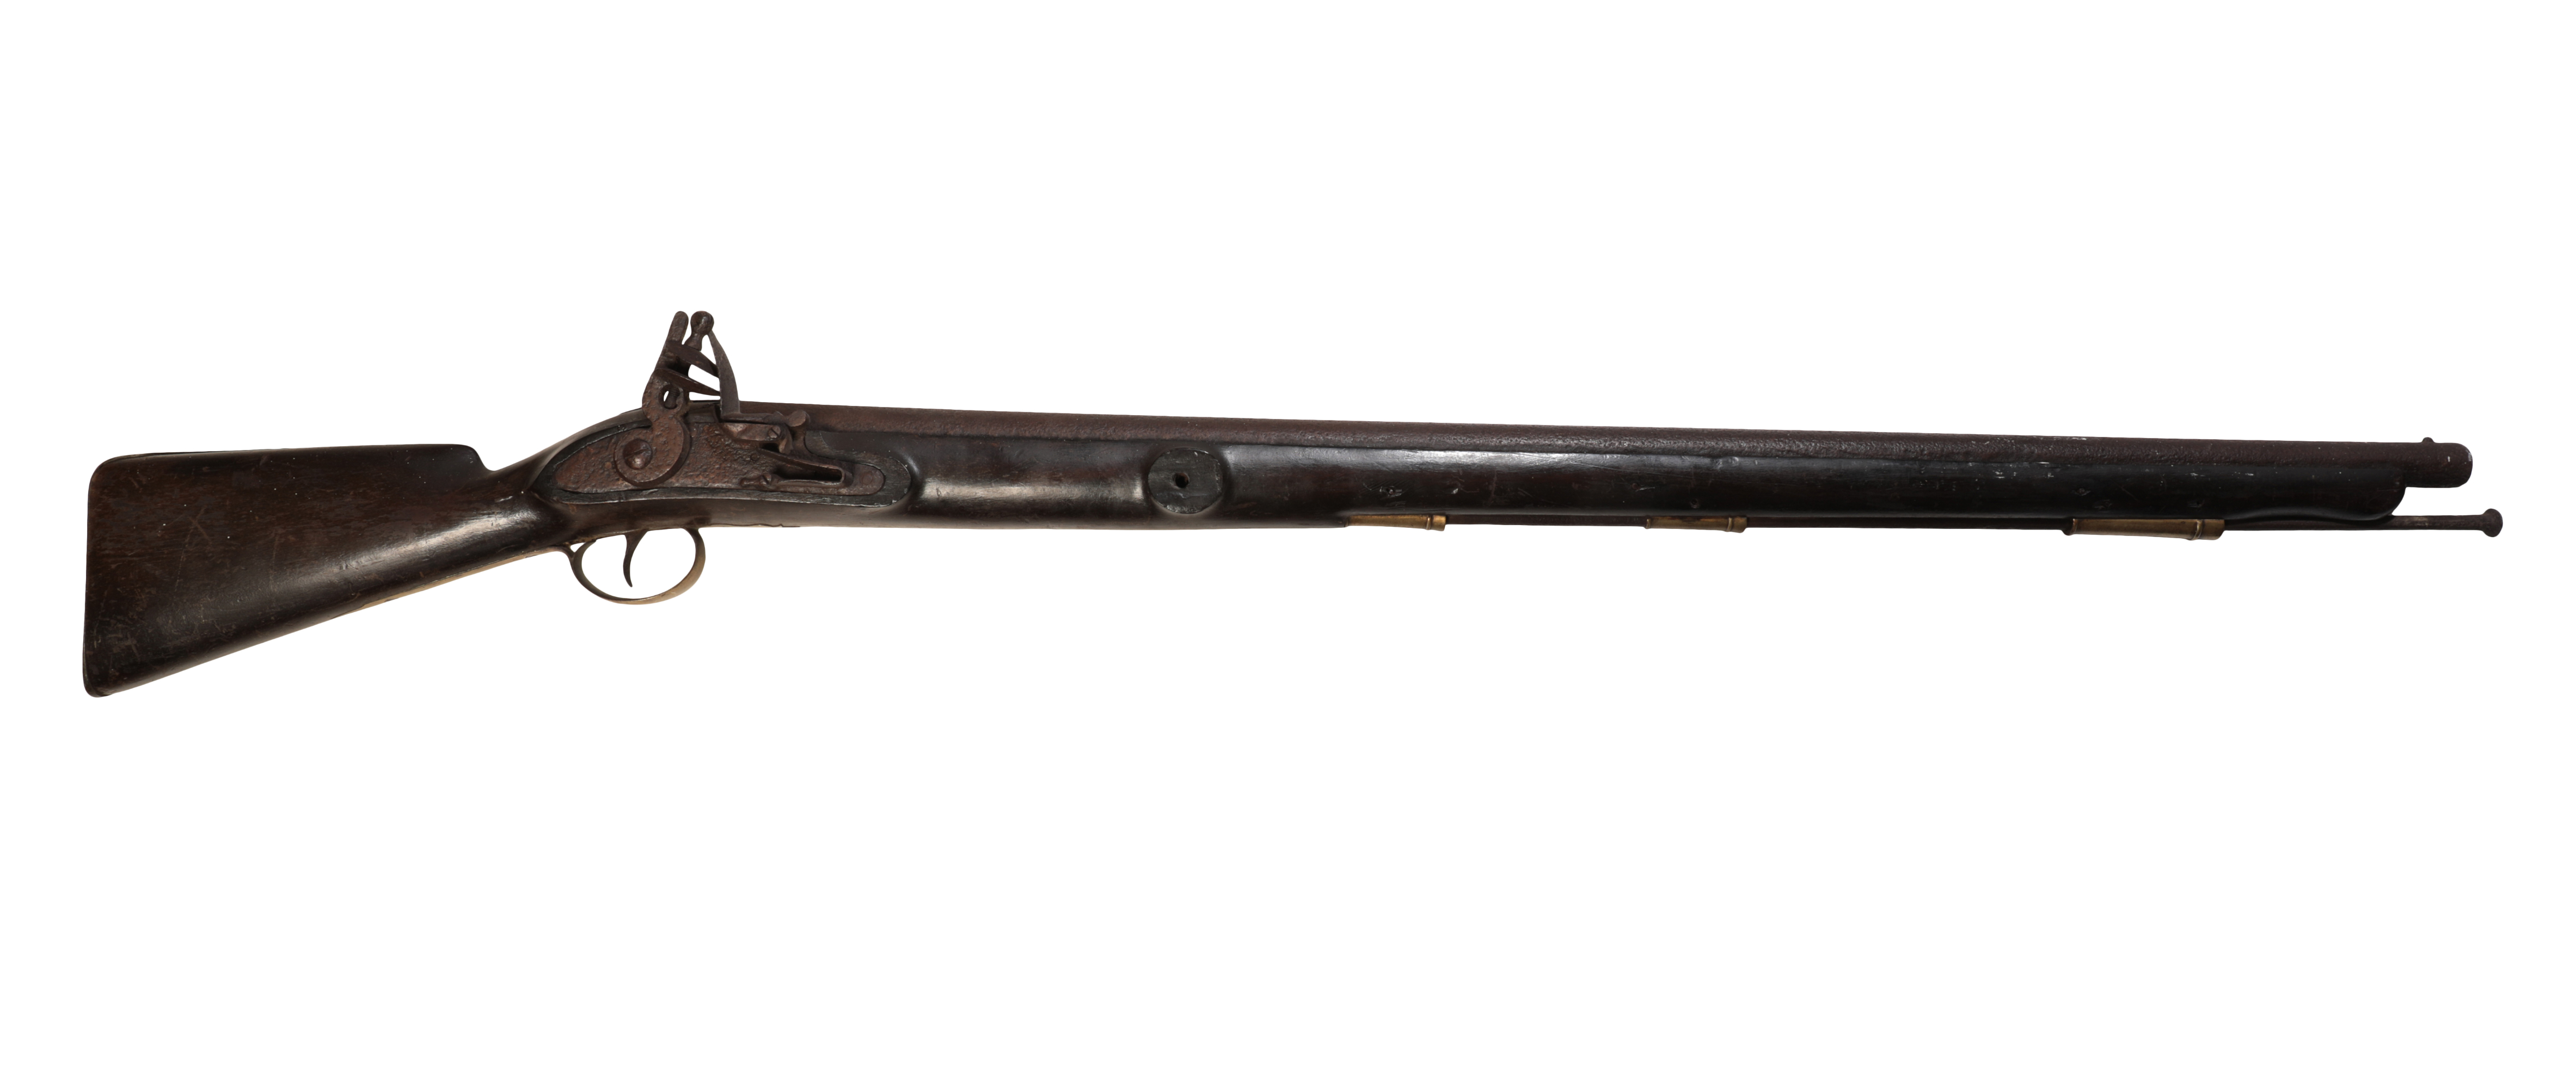 A FLINTLOCK PUNT GUN with full walnut